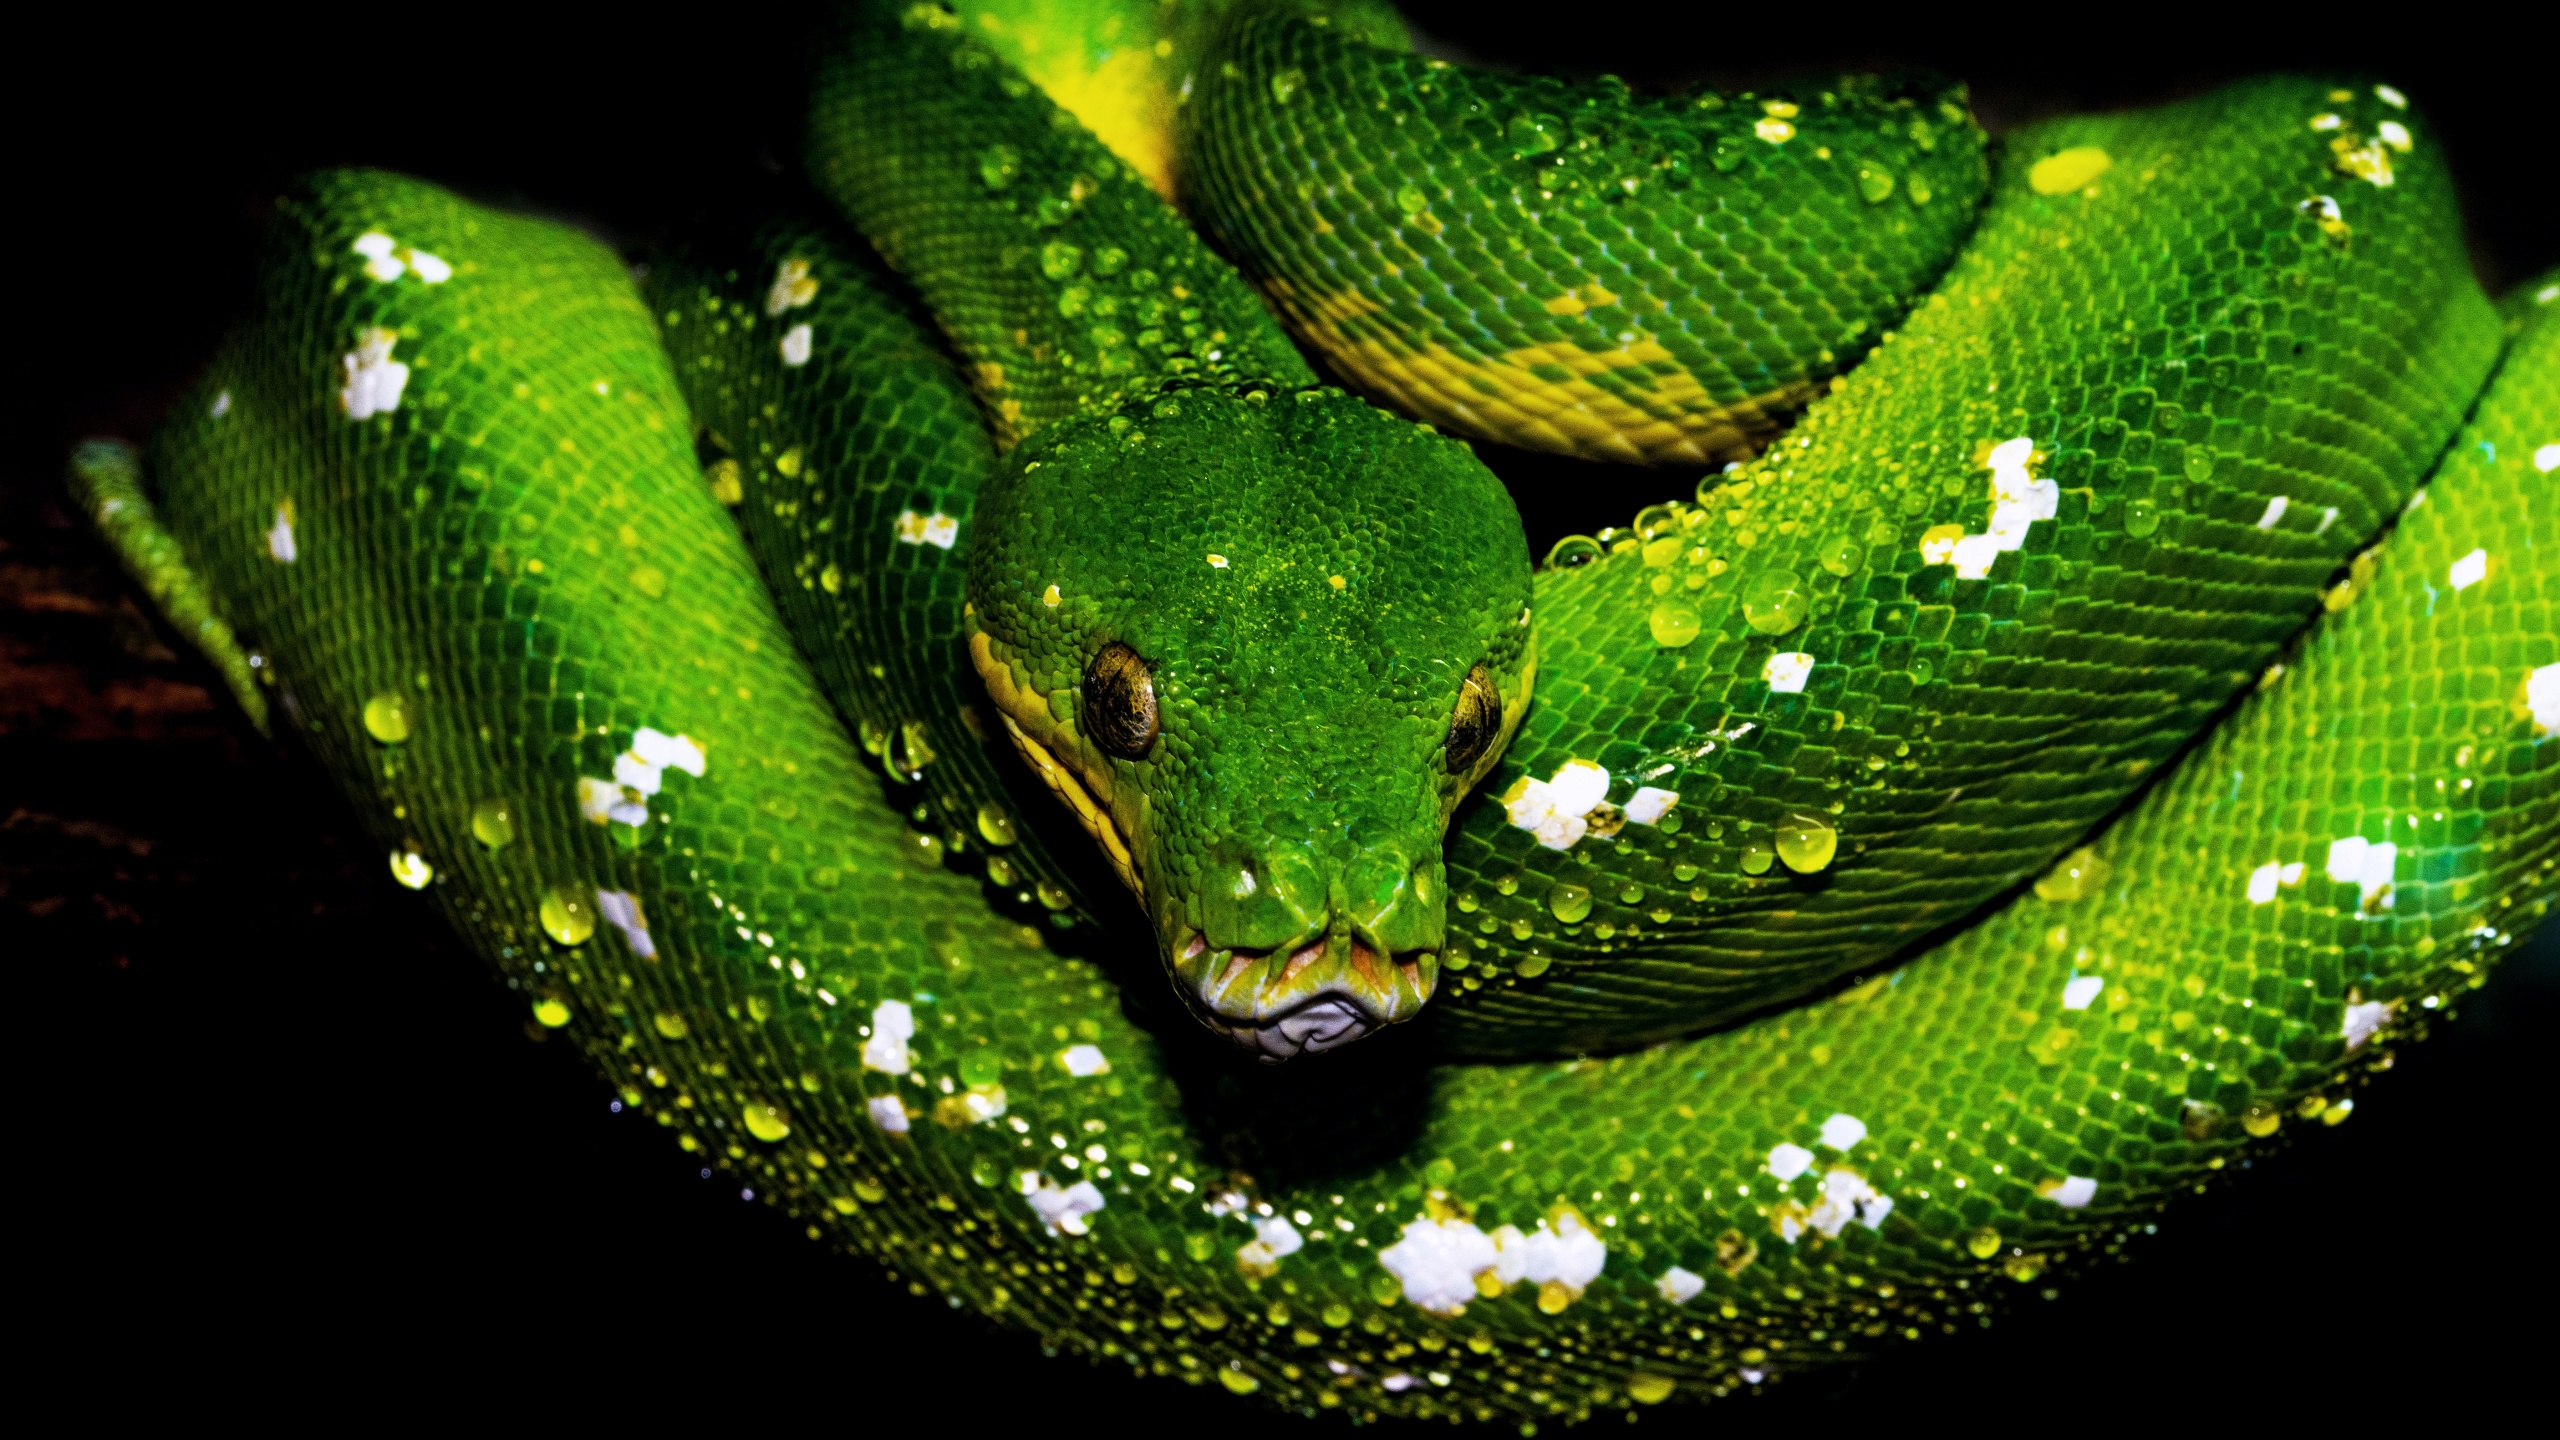 517794 1680x1050 snake green eyes selective coloring boa constrictor  wallpaper JPG 191 kB - Rare Gallery HD Wallpapers